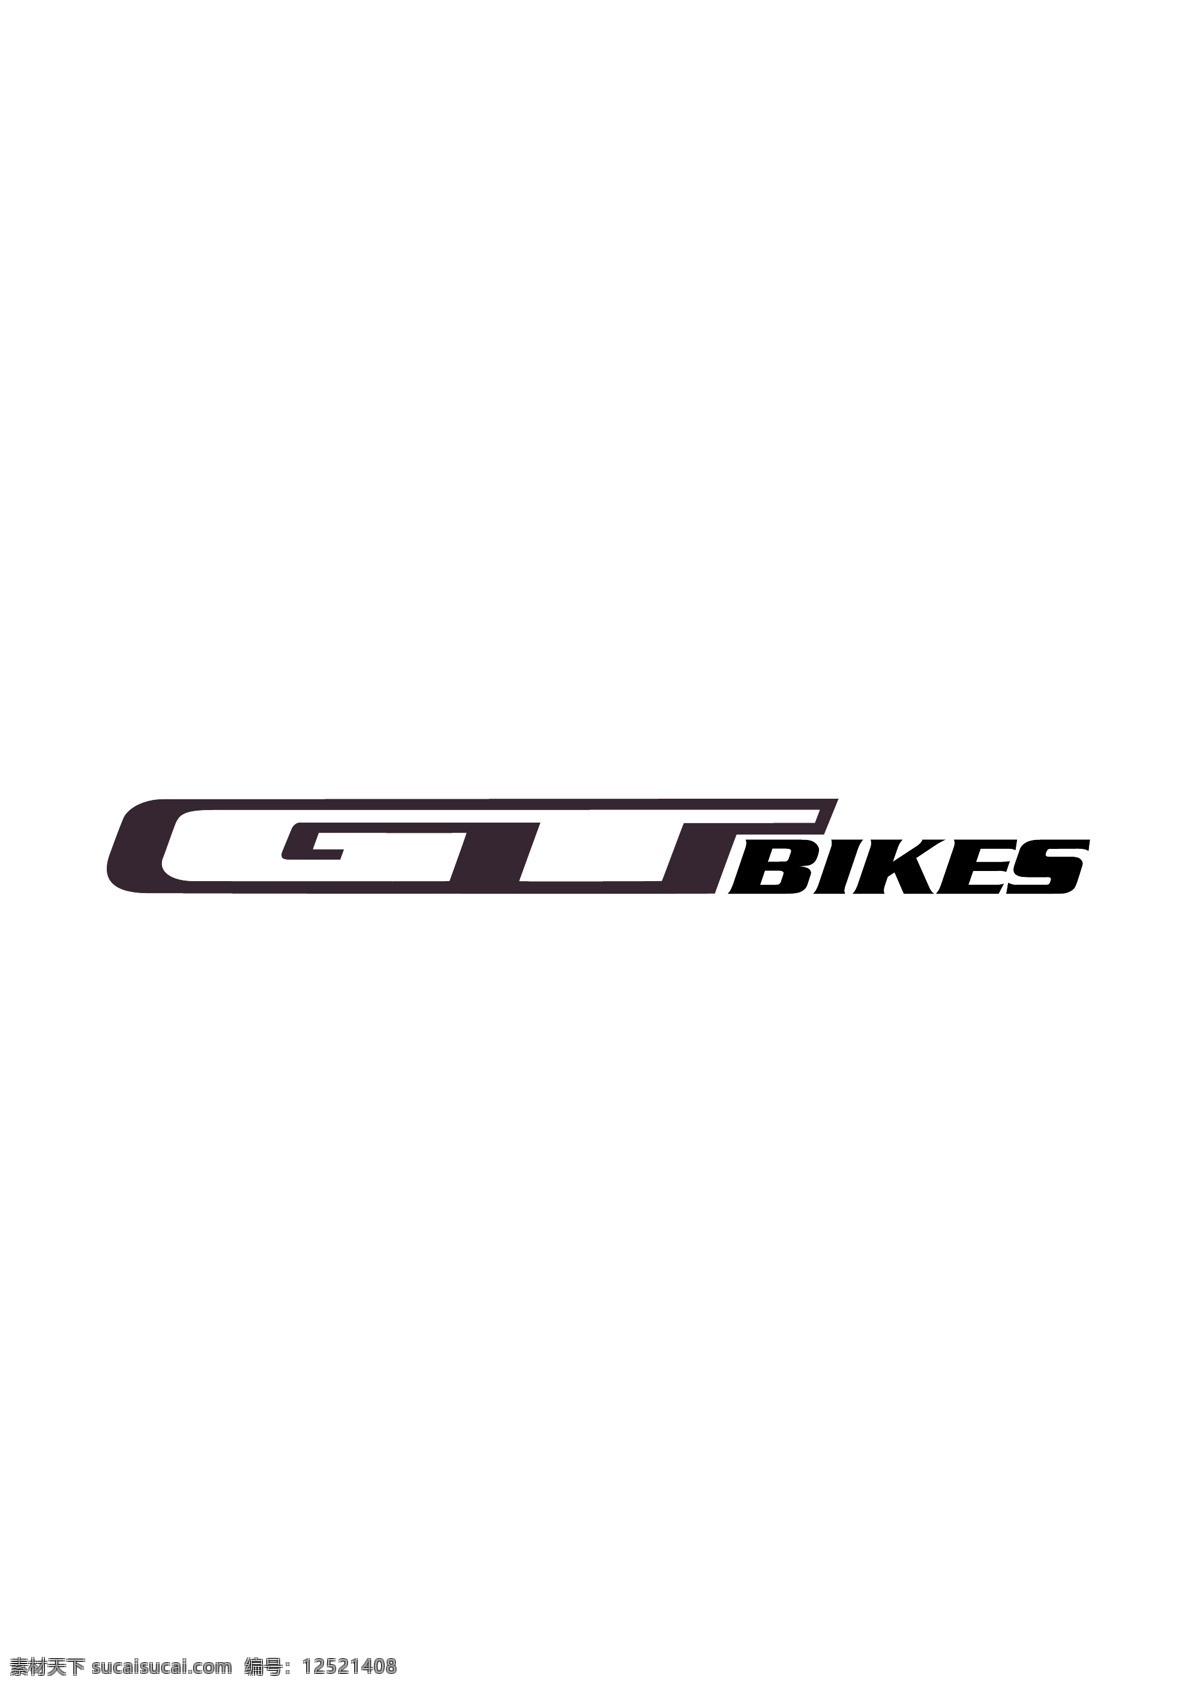 gtbikes logo大全 logo 设计欣赏 商业矢量 矢量下载 运动 标志 标志设计 欣赏 网页矢量 矢量图 其他矢量图